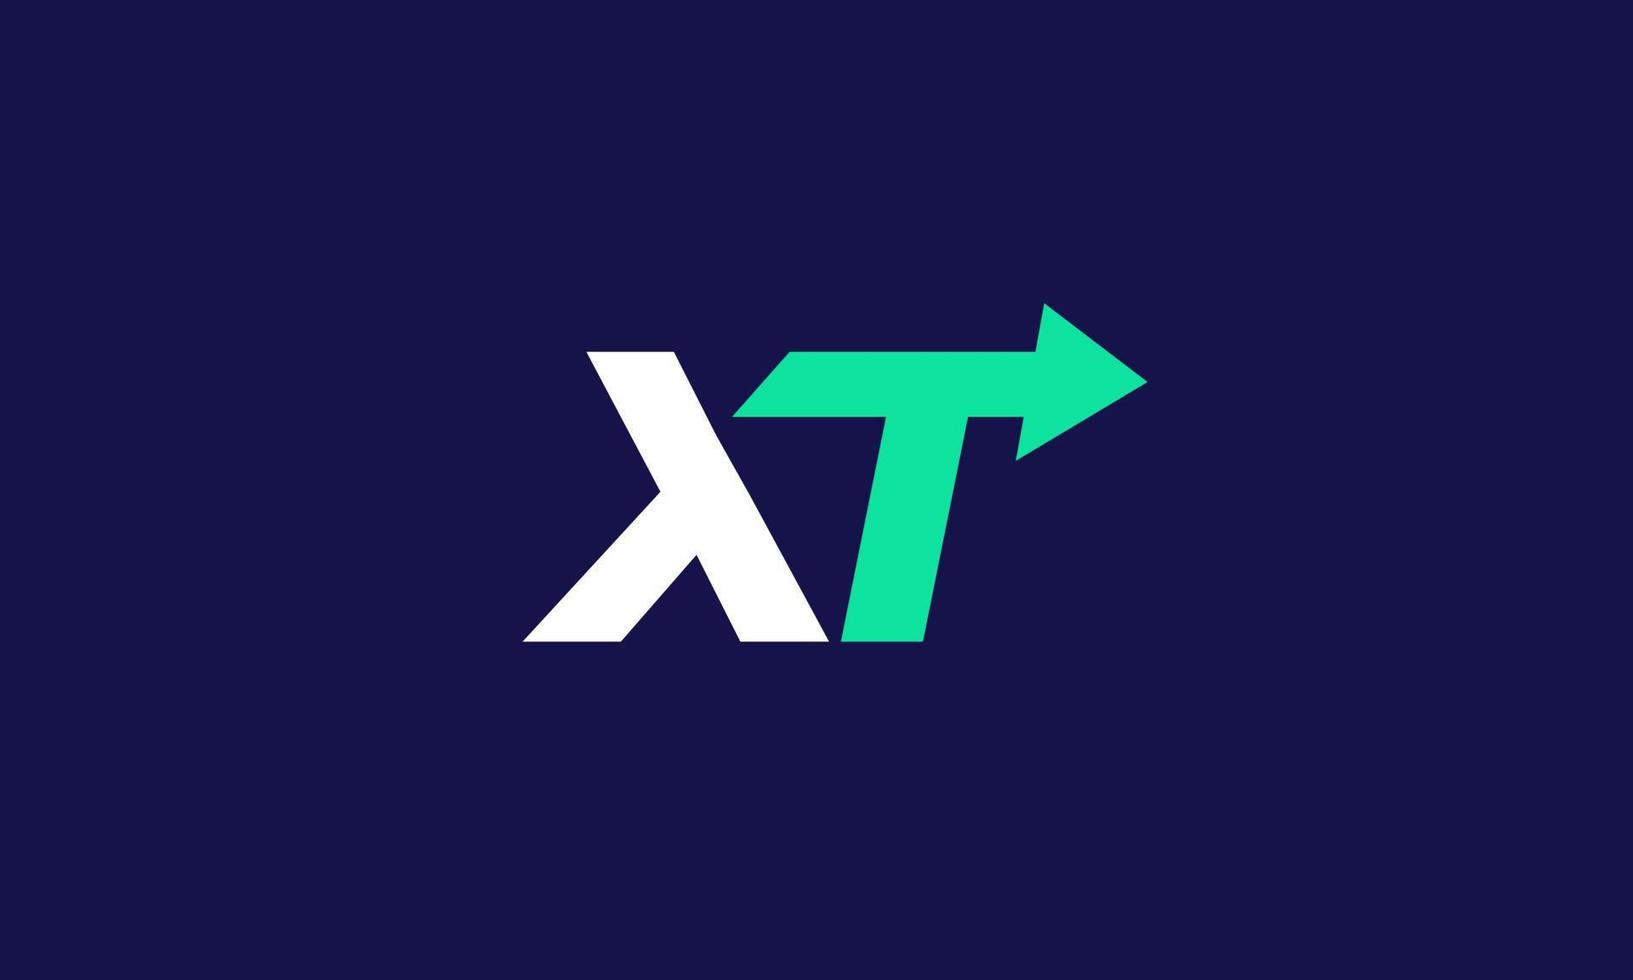 xt-logo ontwerp. letter xt-logo-ontwerp met moderne en strakke stijl vector